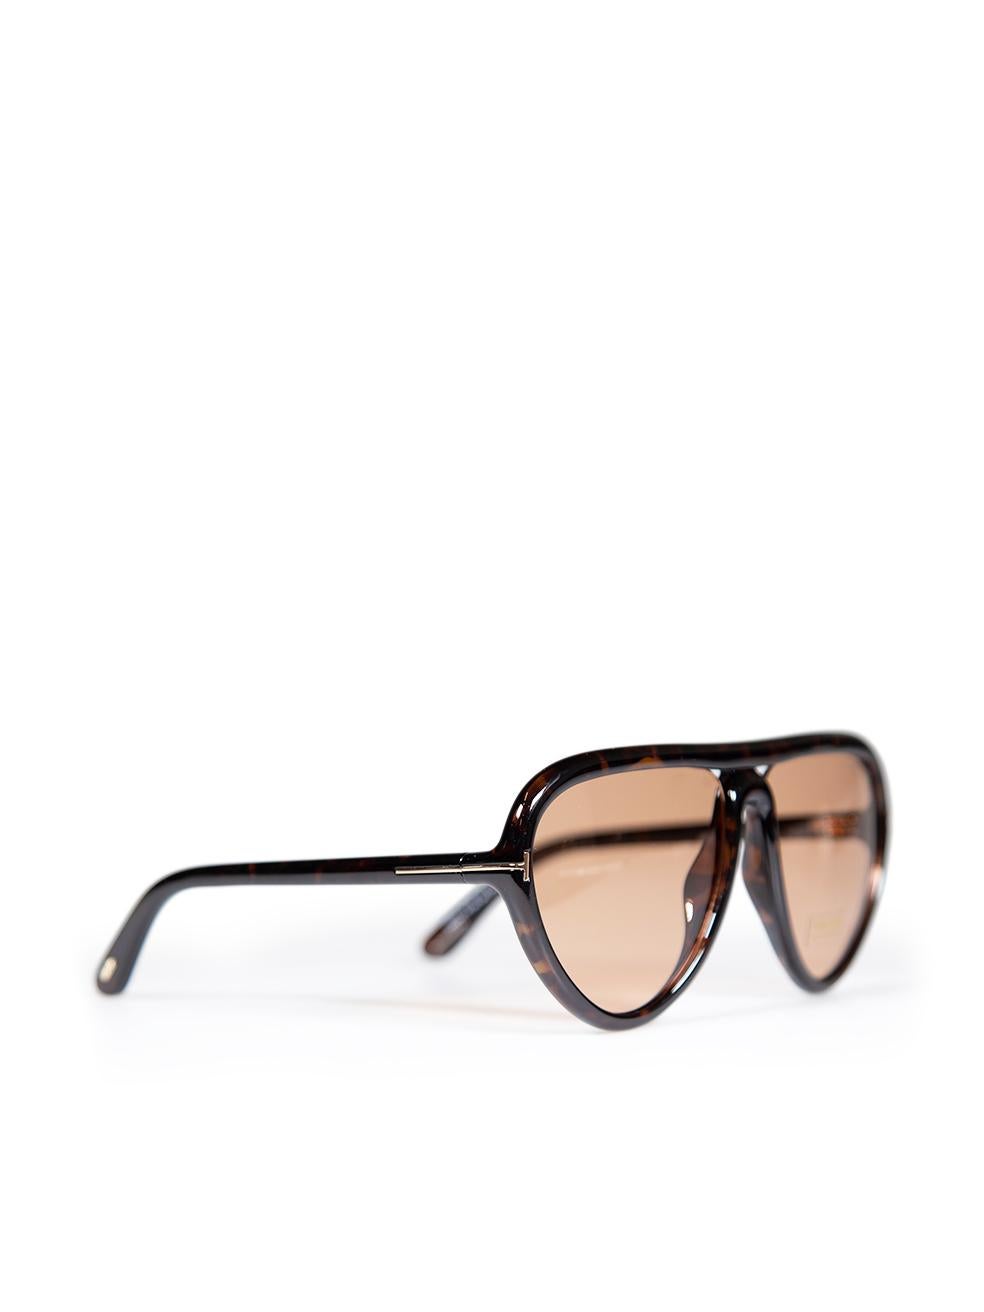 Tom Ford Arizona Dark Havana Pilot Sunglasses In New Condition For Sale In London, GB